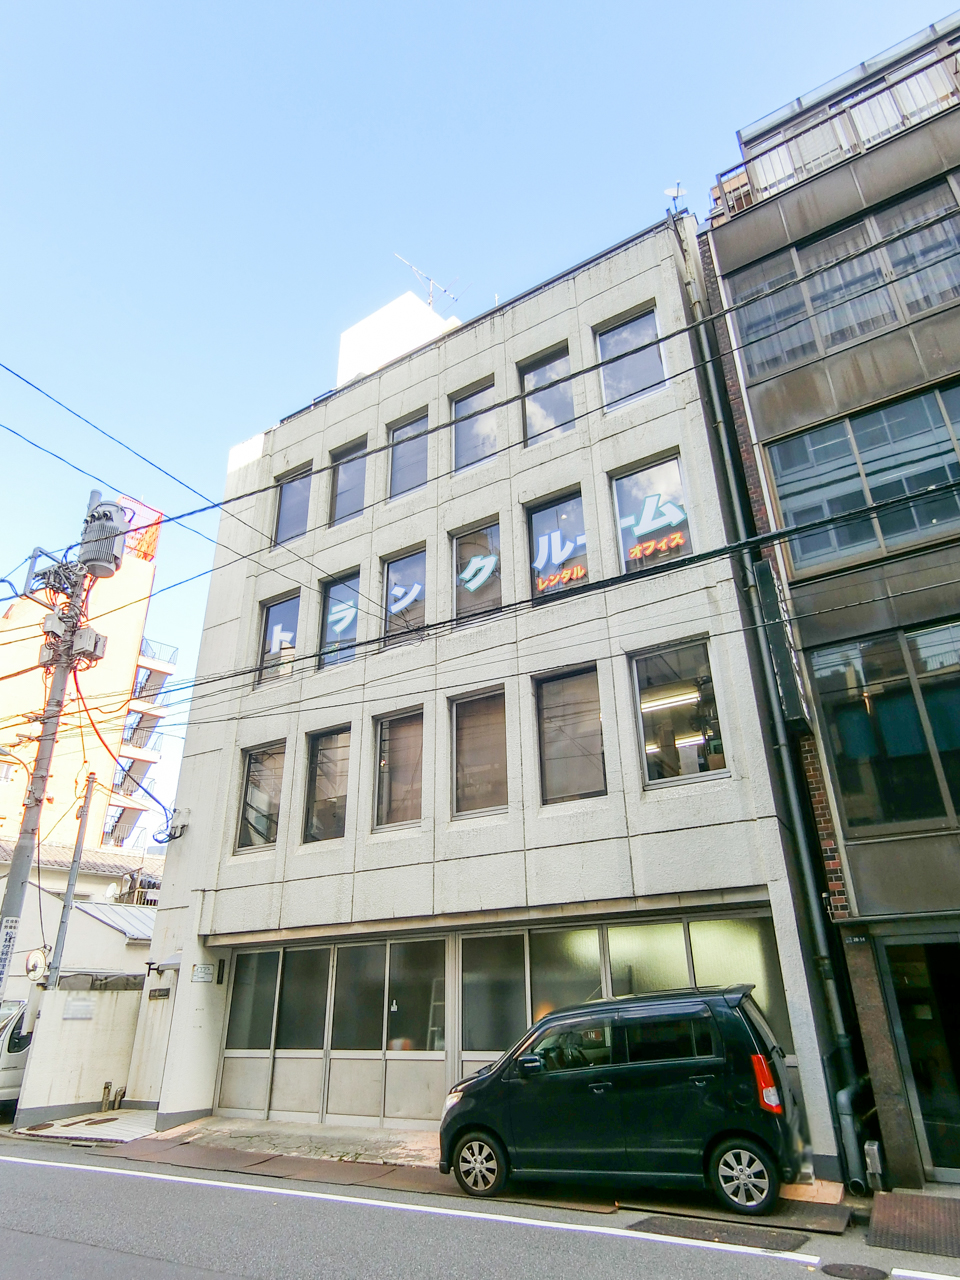 Rental office in Hatchobori, Chuo Ward (Hibiya Riverside Building)